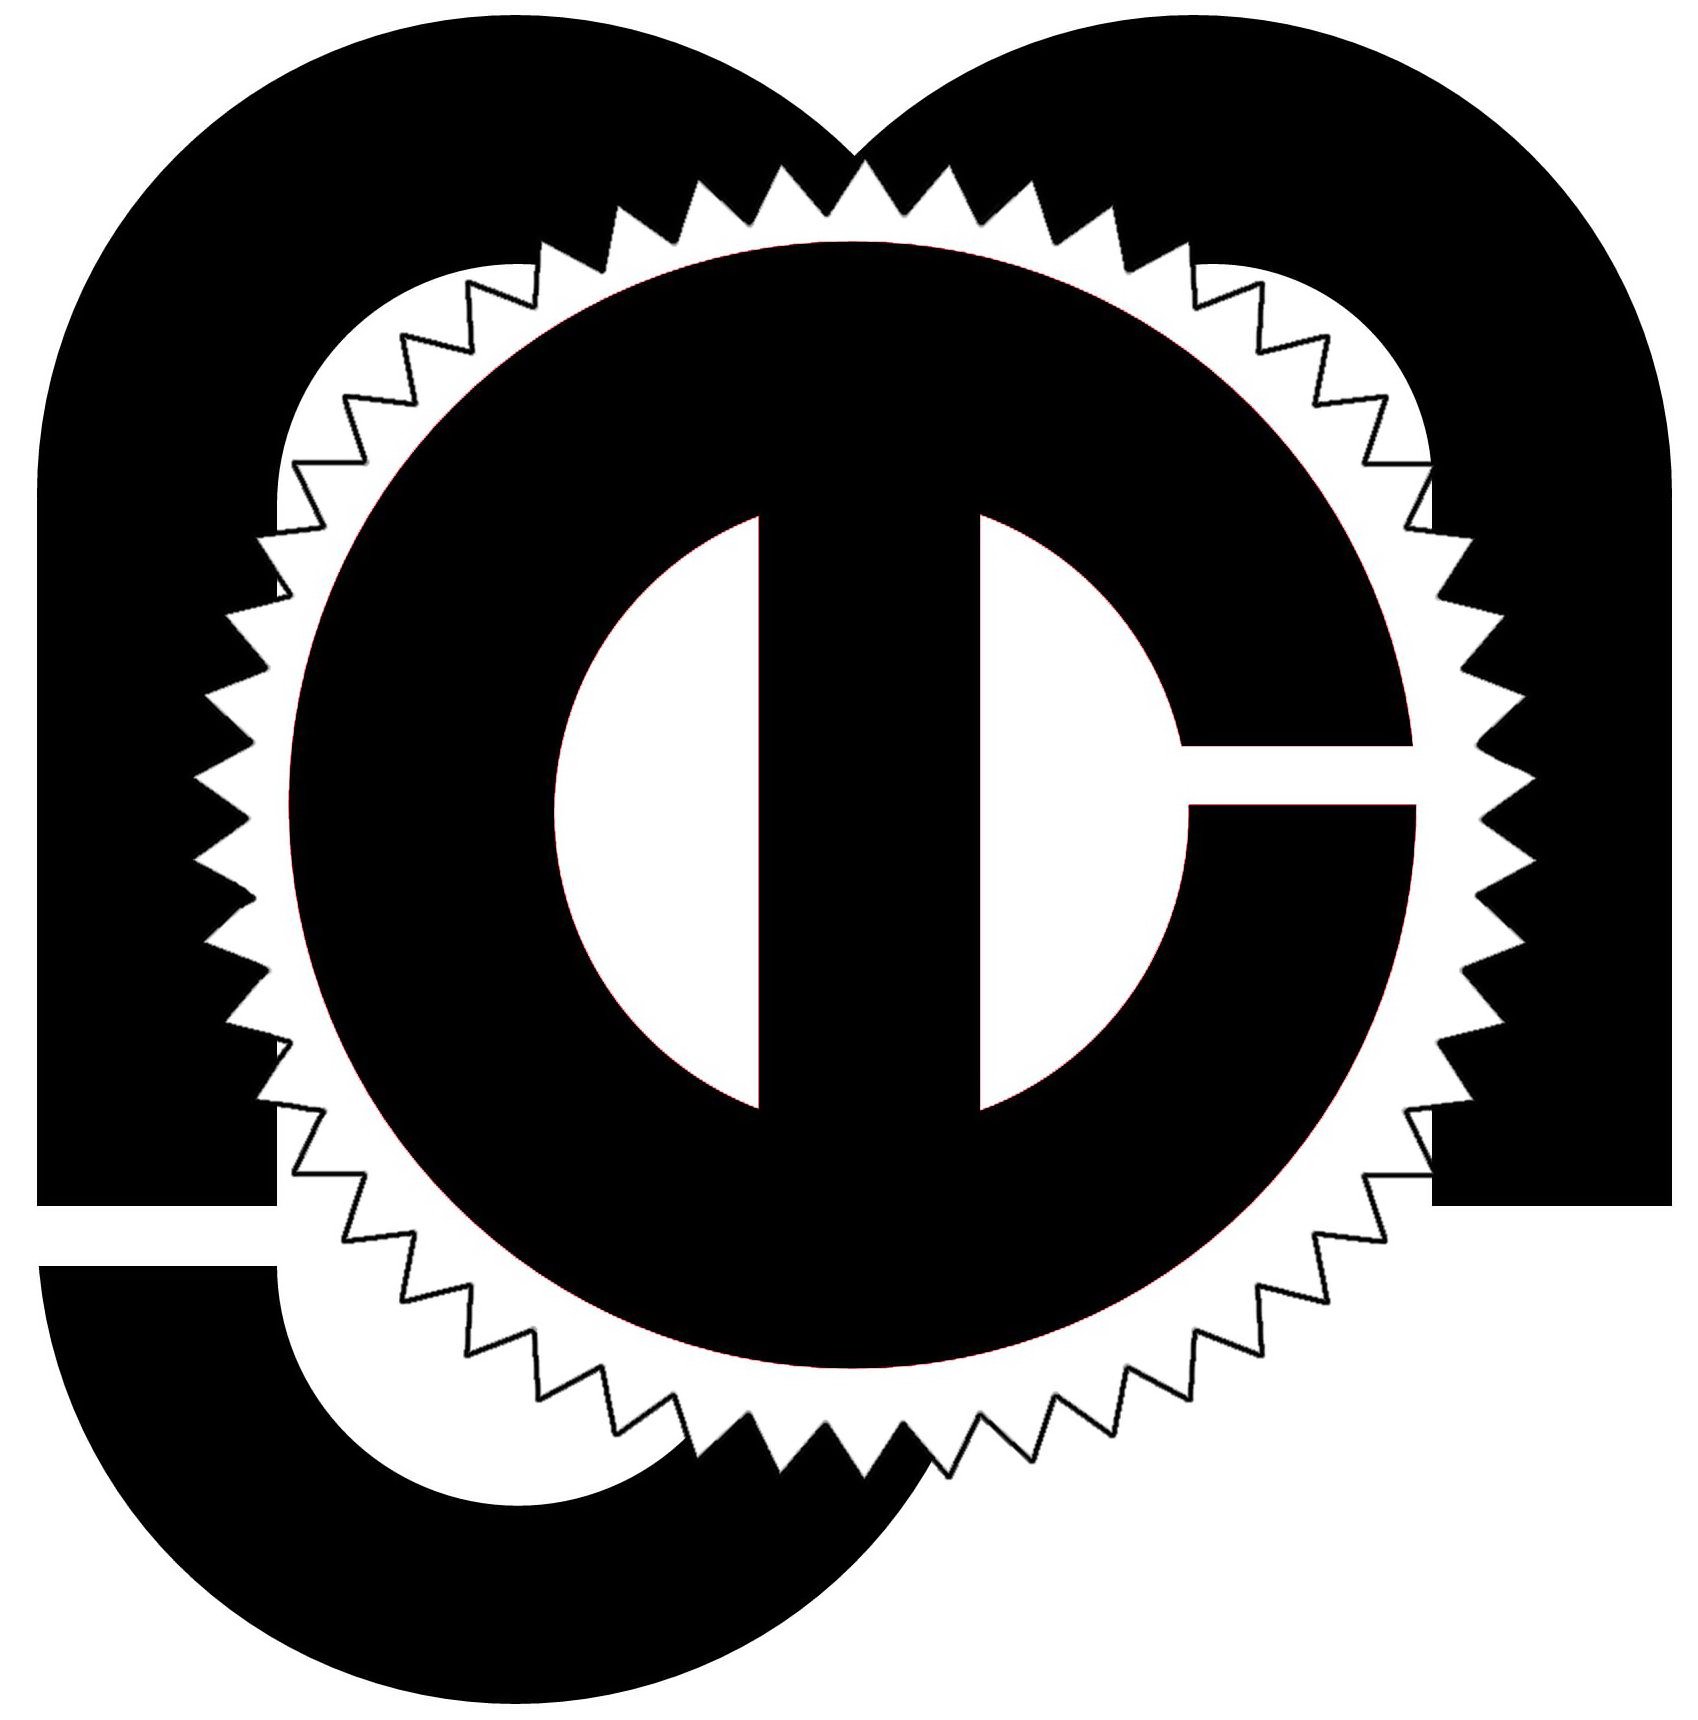 Trademark Logo MJC